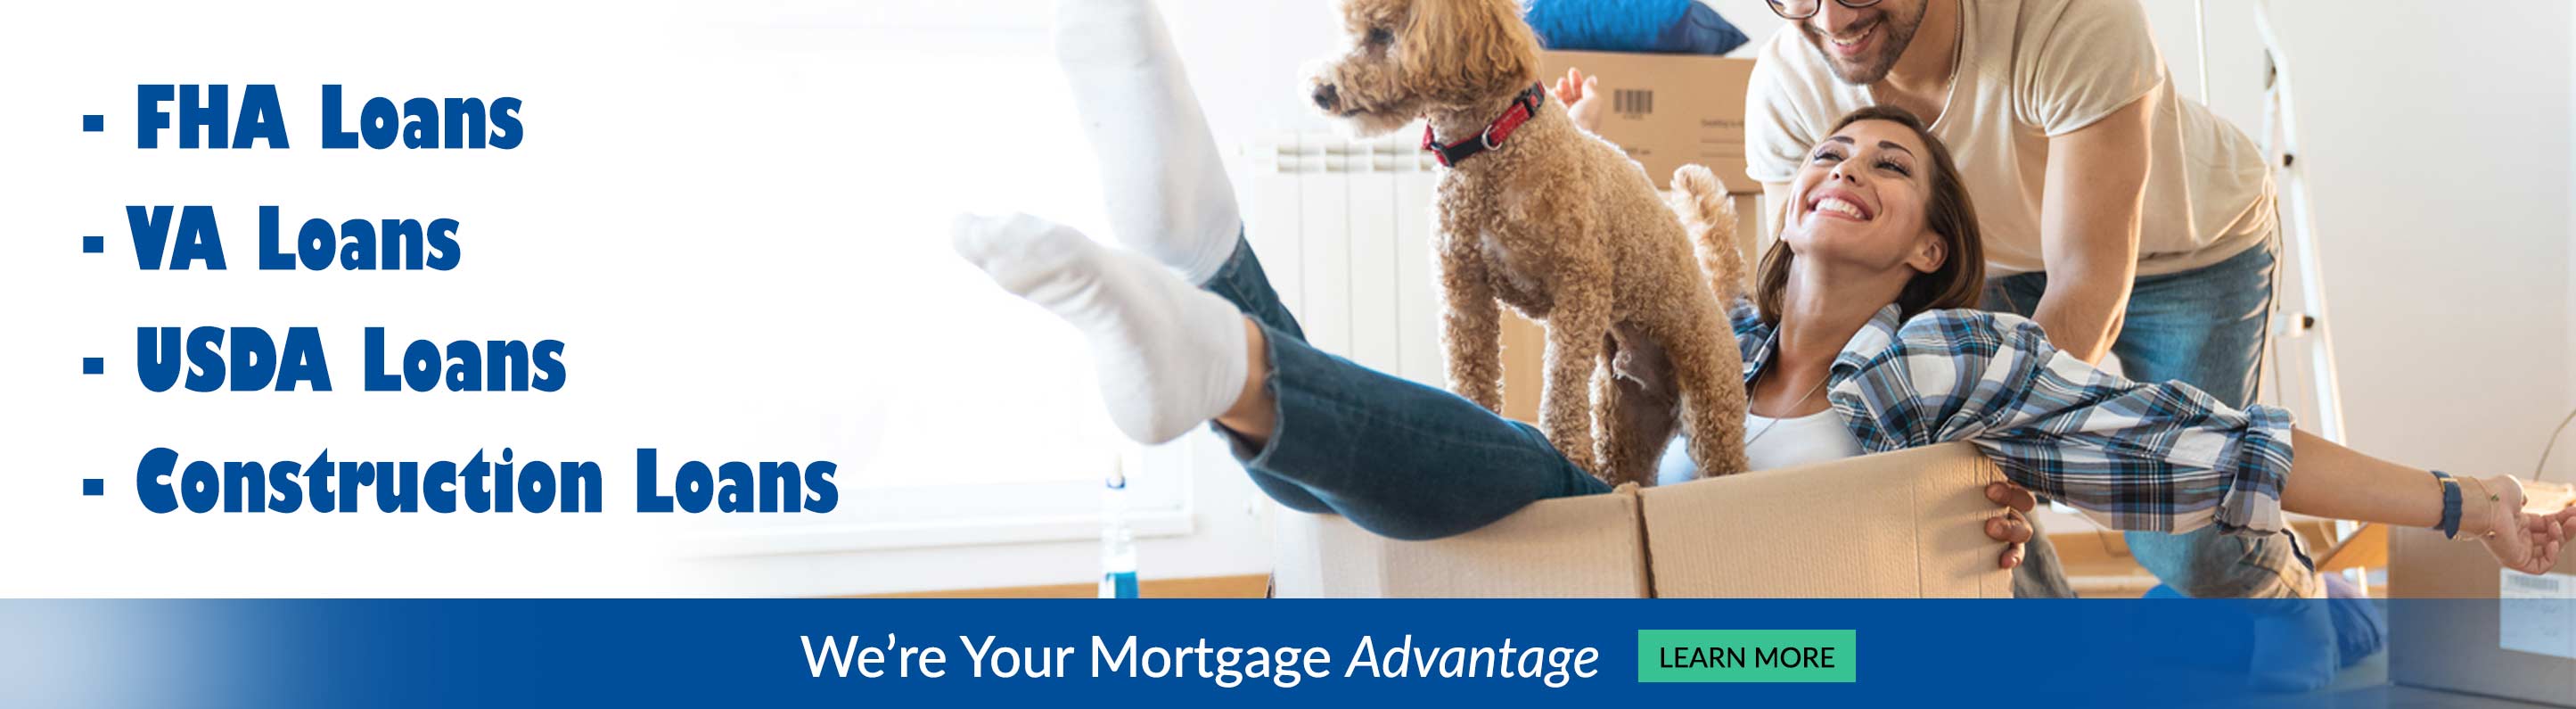 FHA Loans, VA Loans, USDA Loans, Construction Loans! We're your mortgage advatage. Learn More.